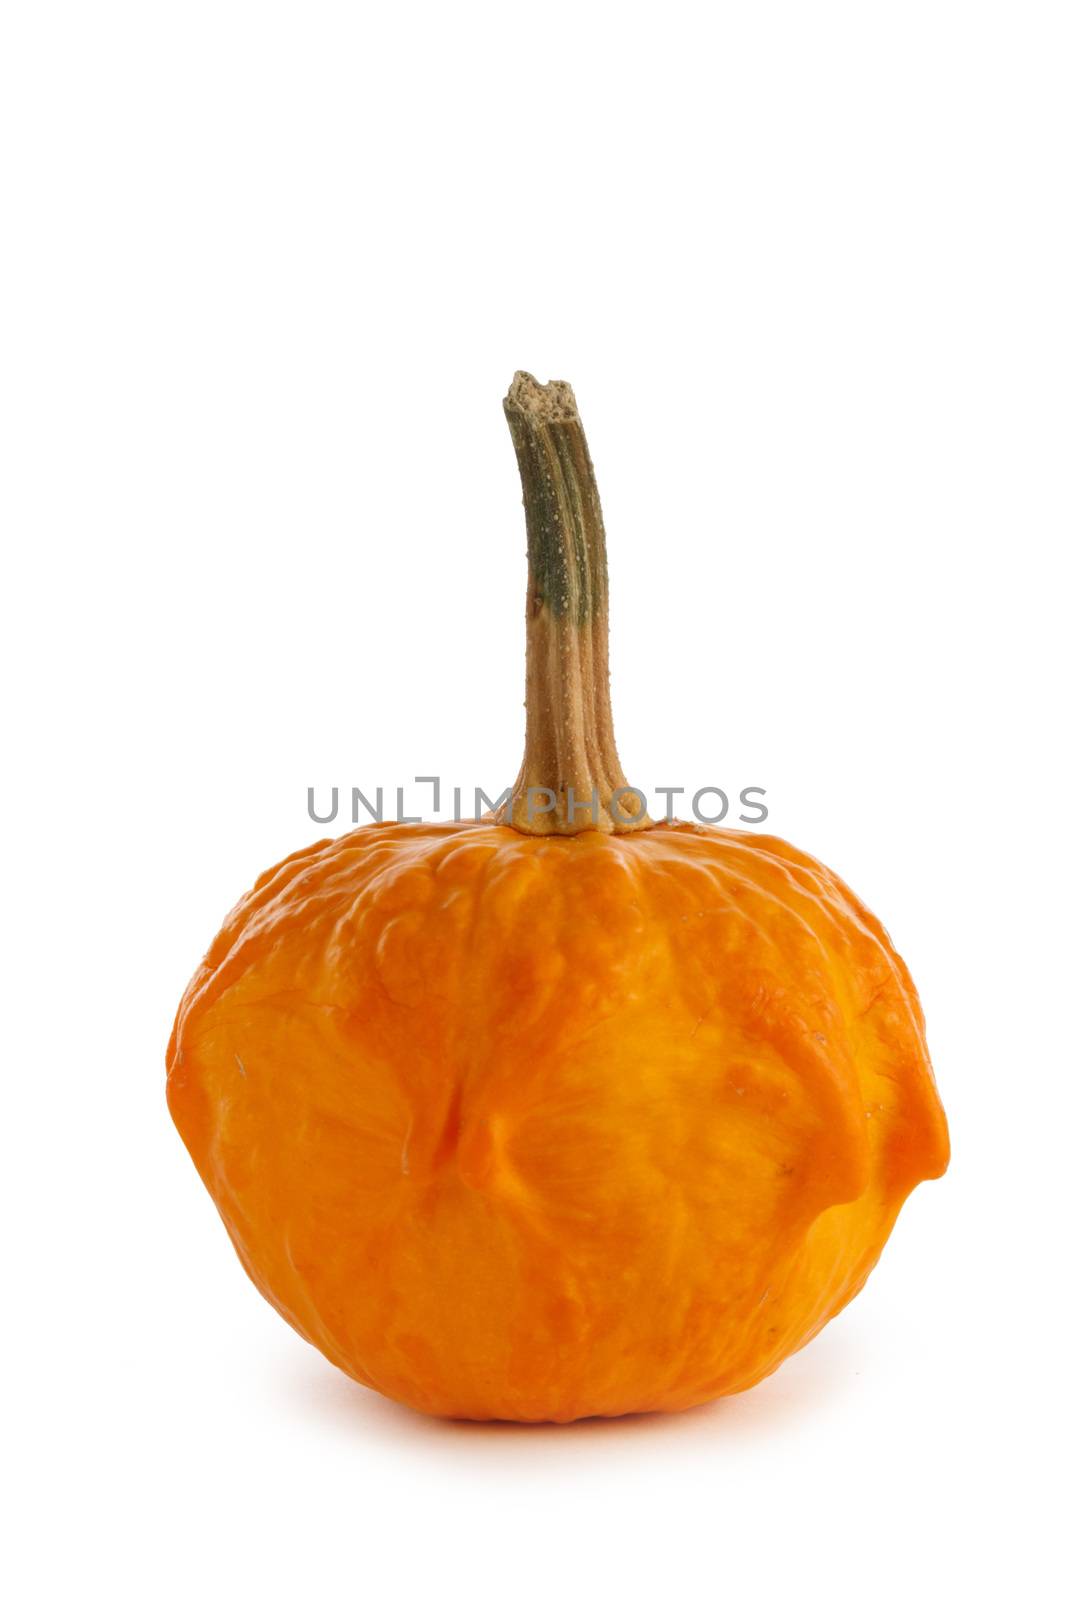 One unusual pumpkin by Yellowj